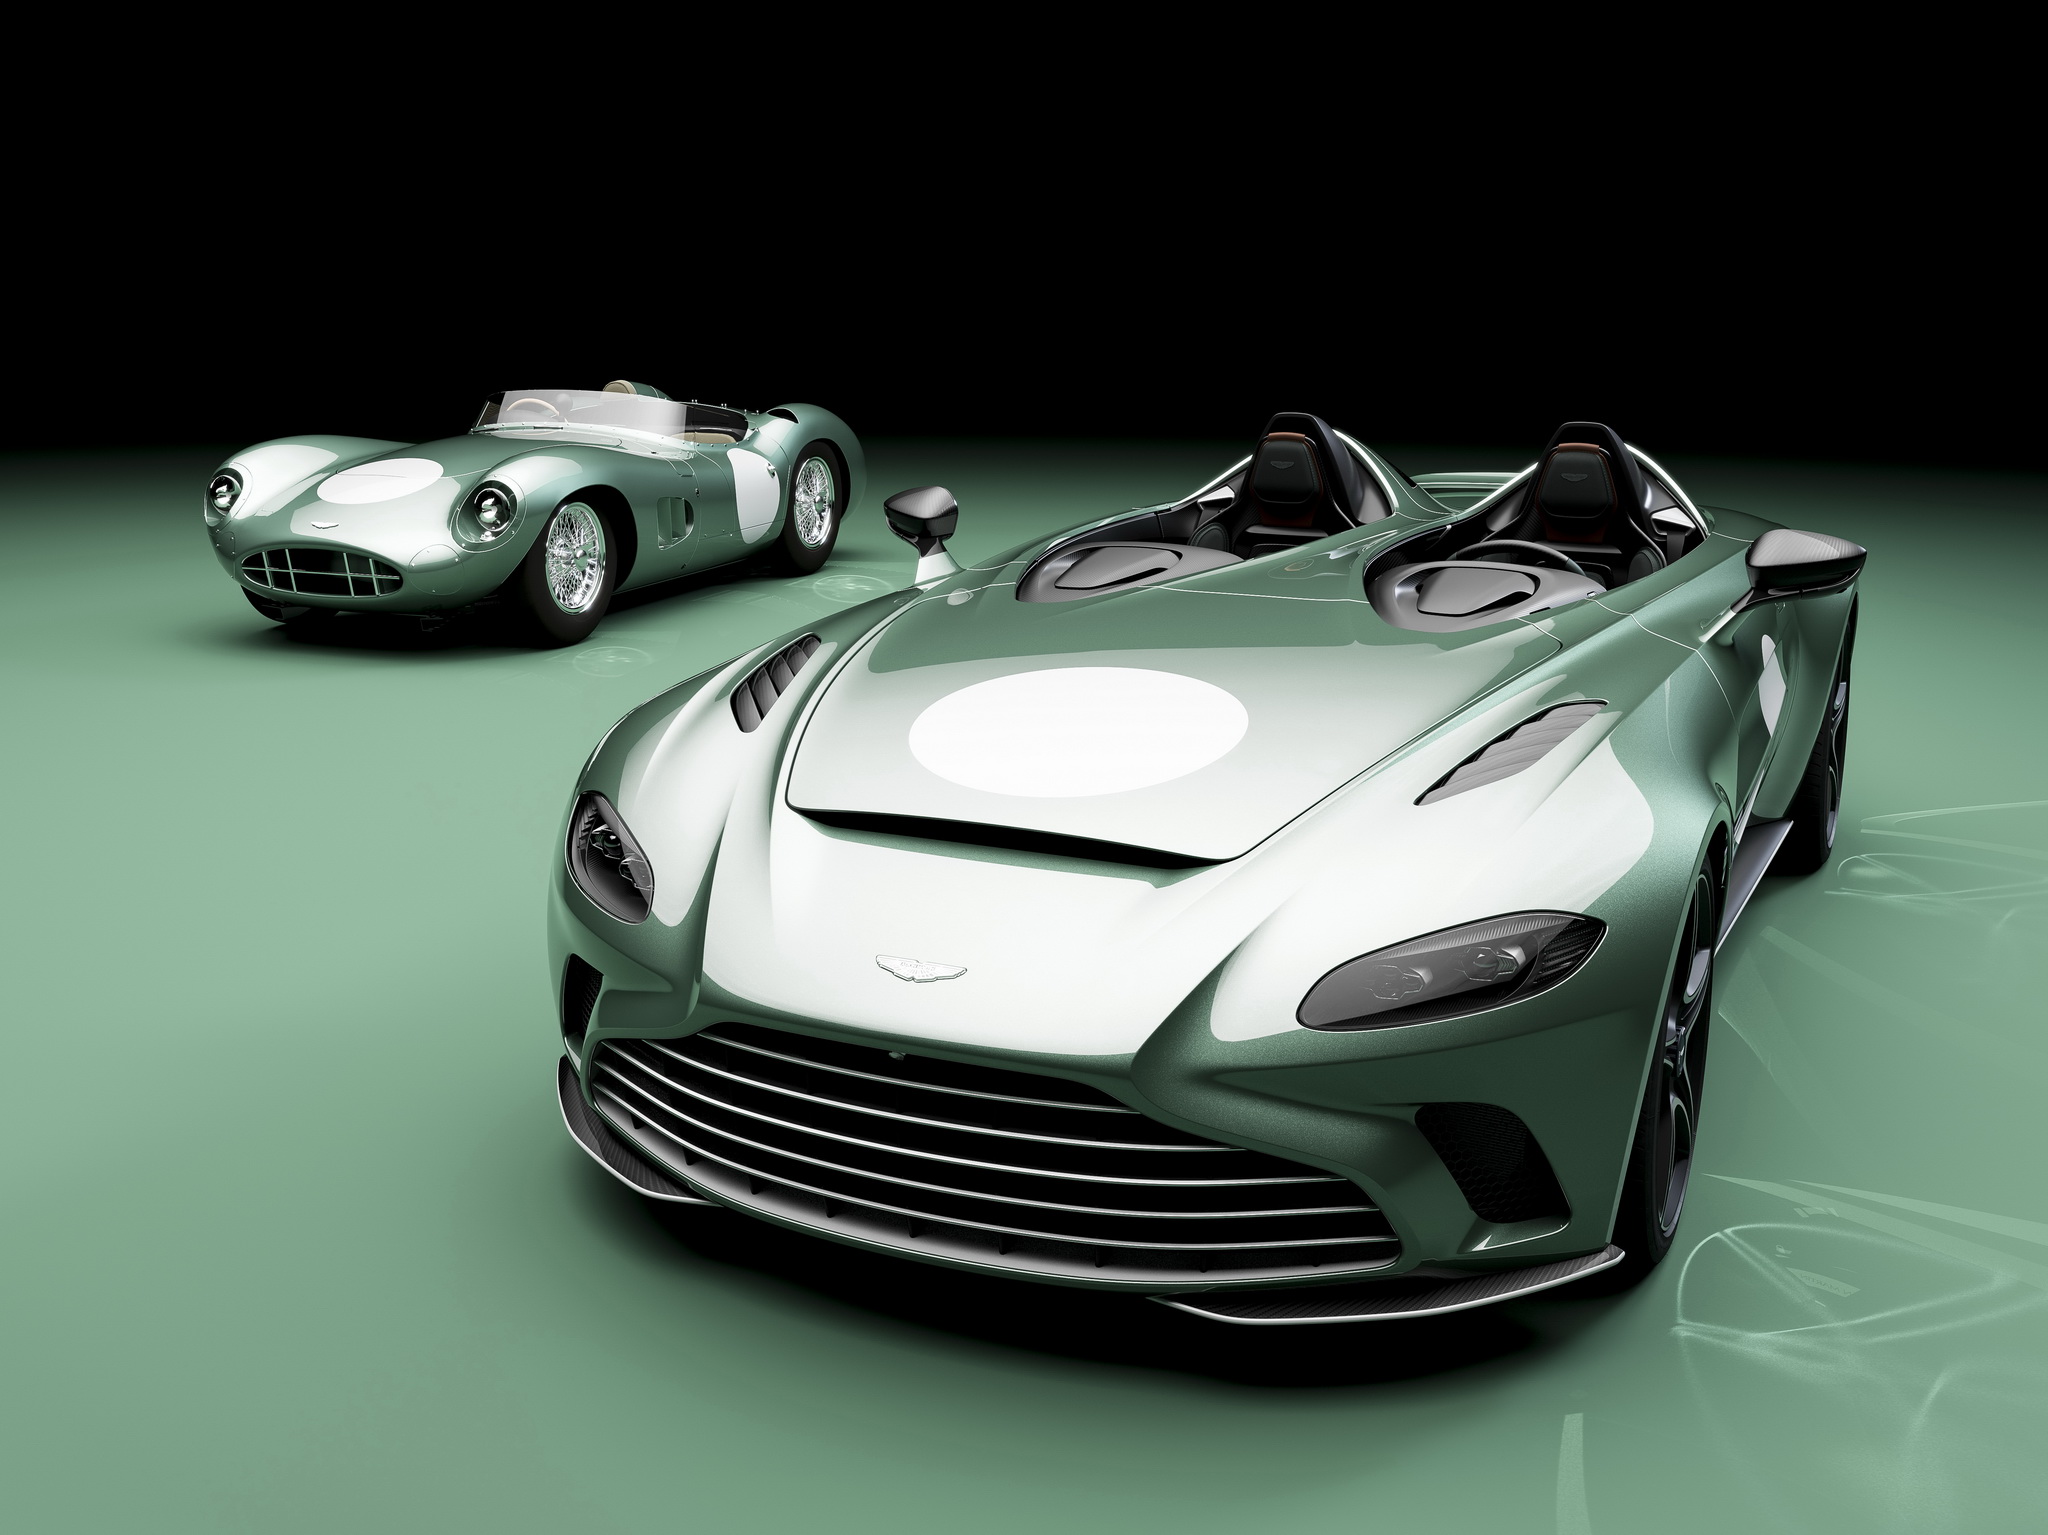 Aston Martin V12 Speedster DBR1 ดีไซน์พิเศษจากตำนานรถแข่ง DBR1 สุดหายาก